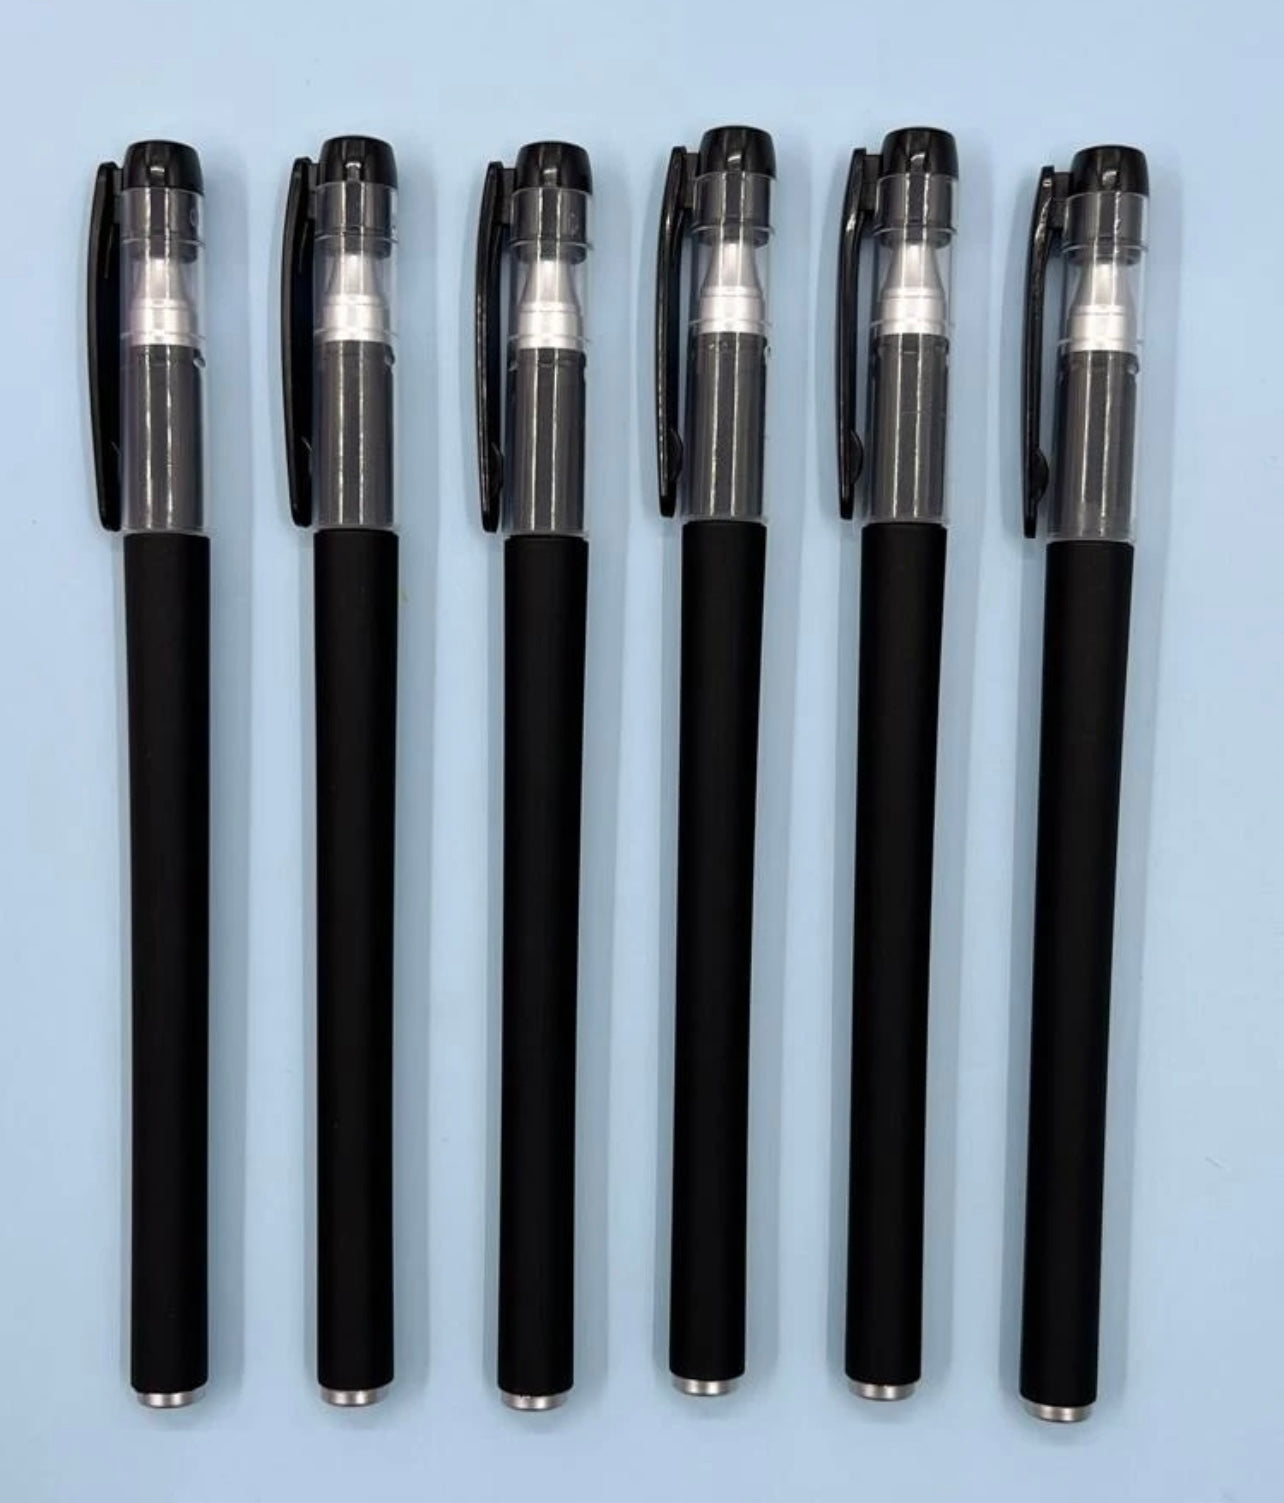 2 x Black Gel Pen (RECOMMENDED)